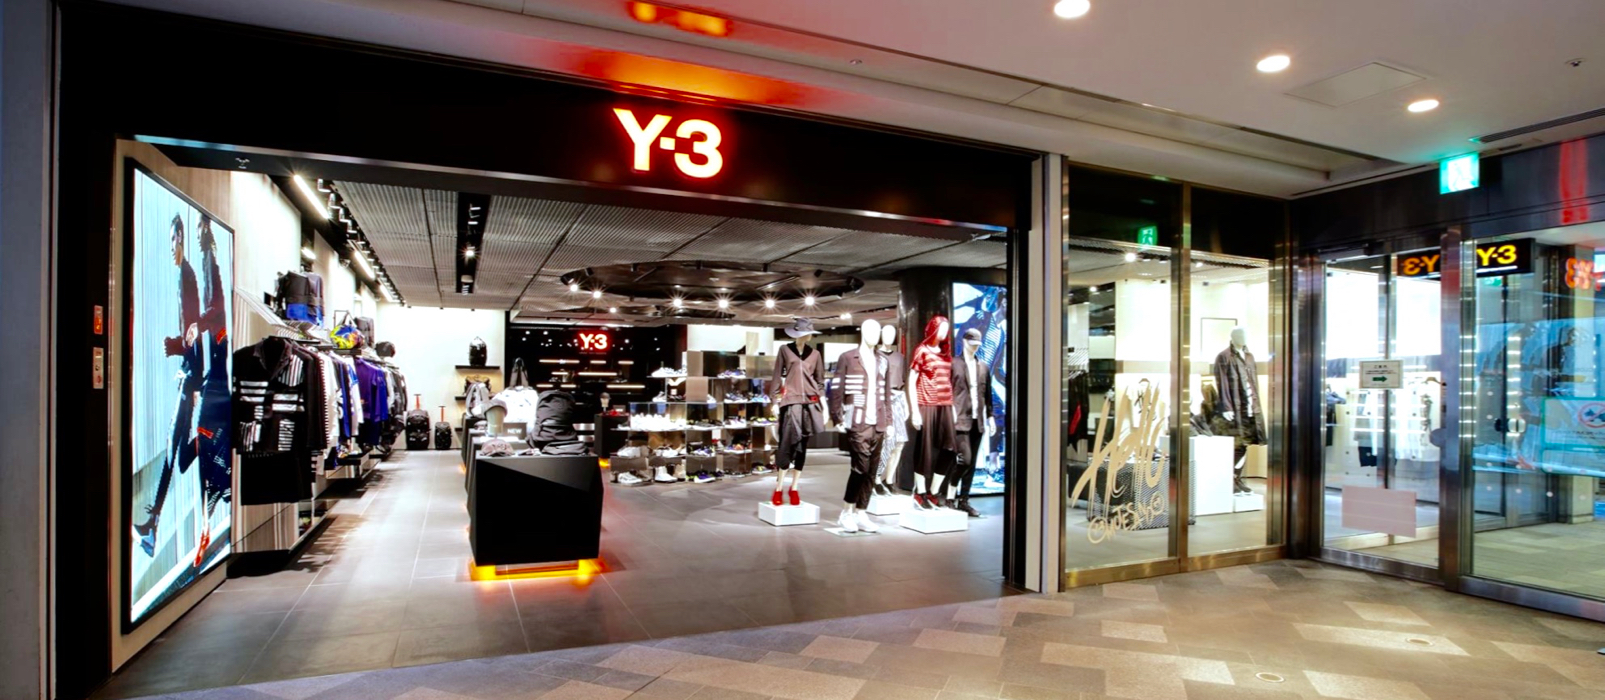 y3 store